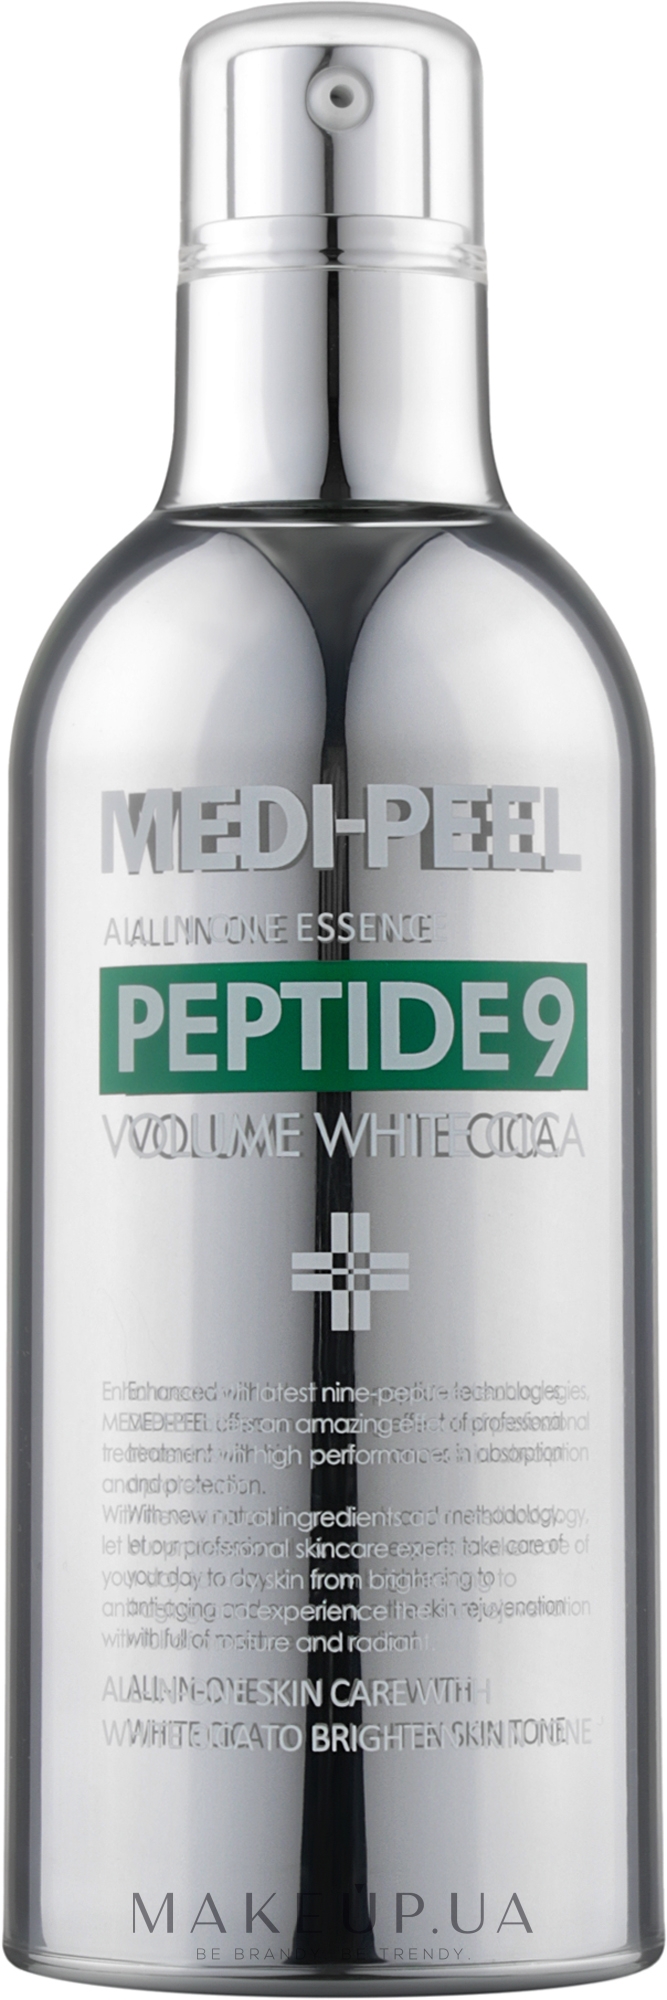 Осветляющая кислородная эссенция с центеллой - Medi Peel Peptide 9 Volume White Cica Essence — фото 100ml